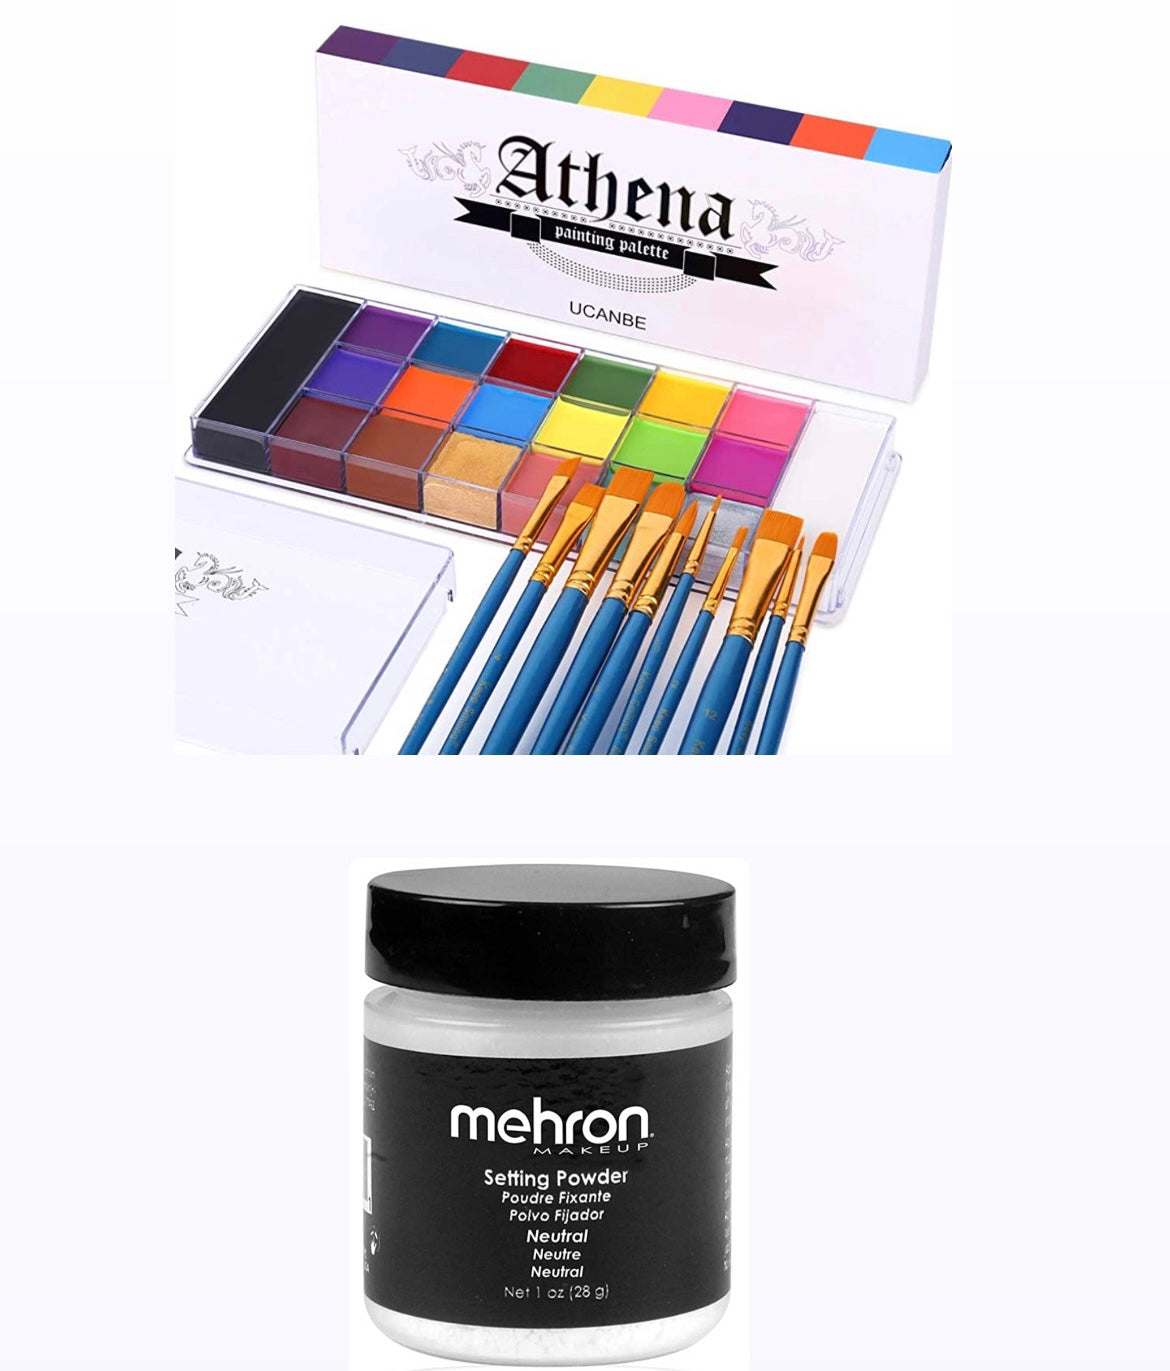 Set Athena palette + Mehron Powder painting – antoshkabeauty